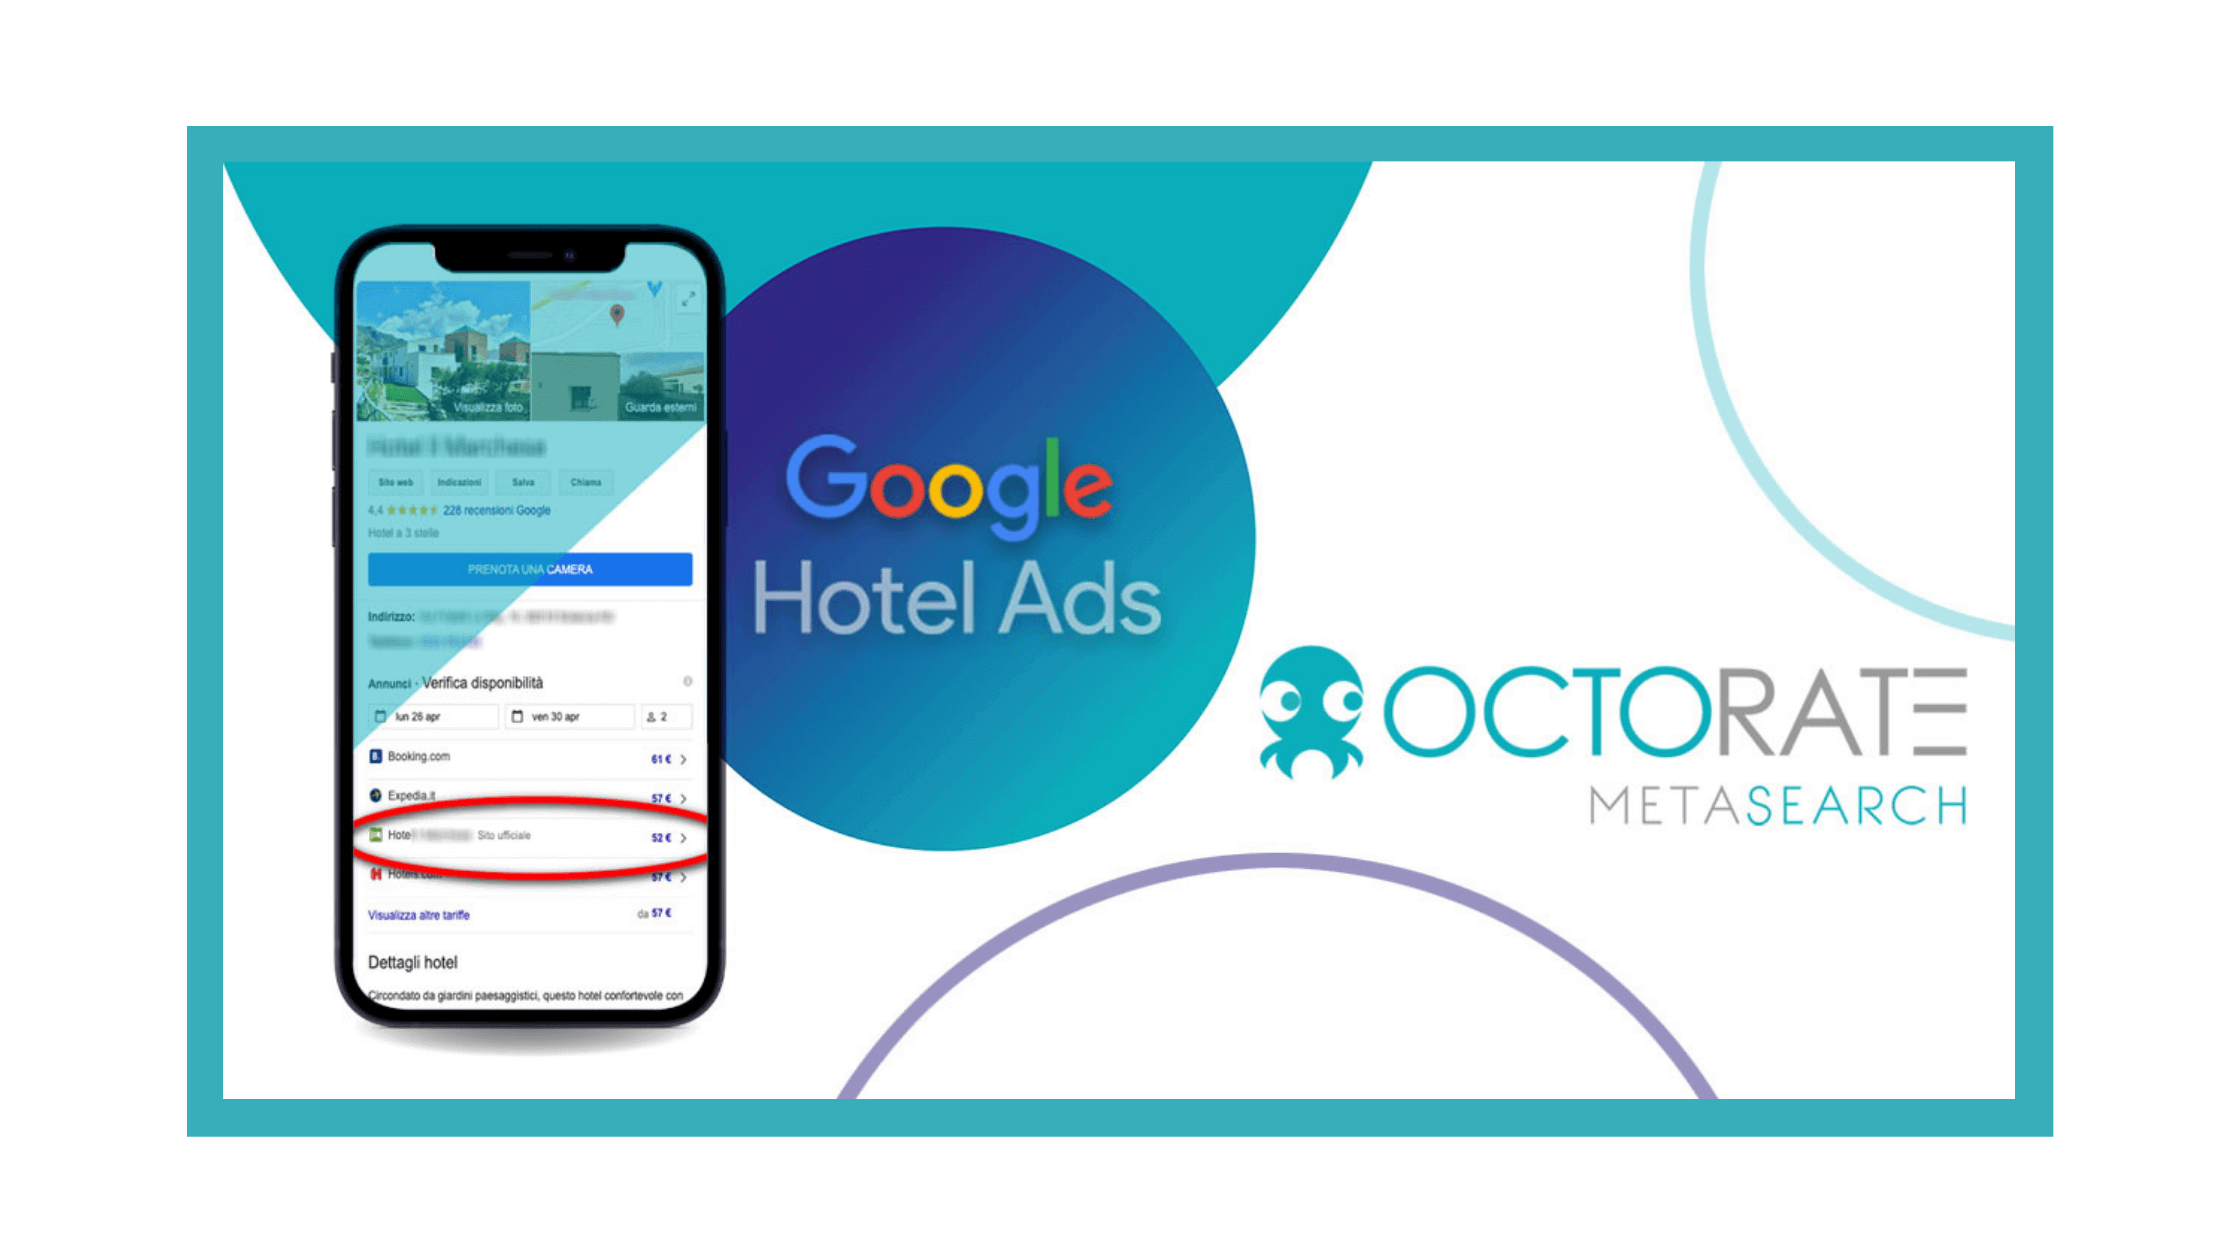 Octorate Metasearch link gratuiti Google Hotel Ads